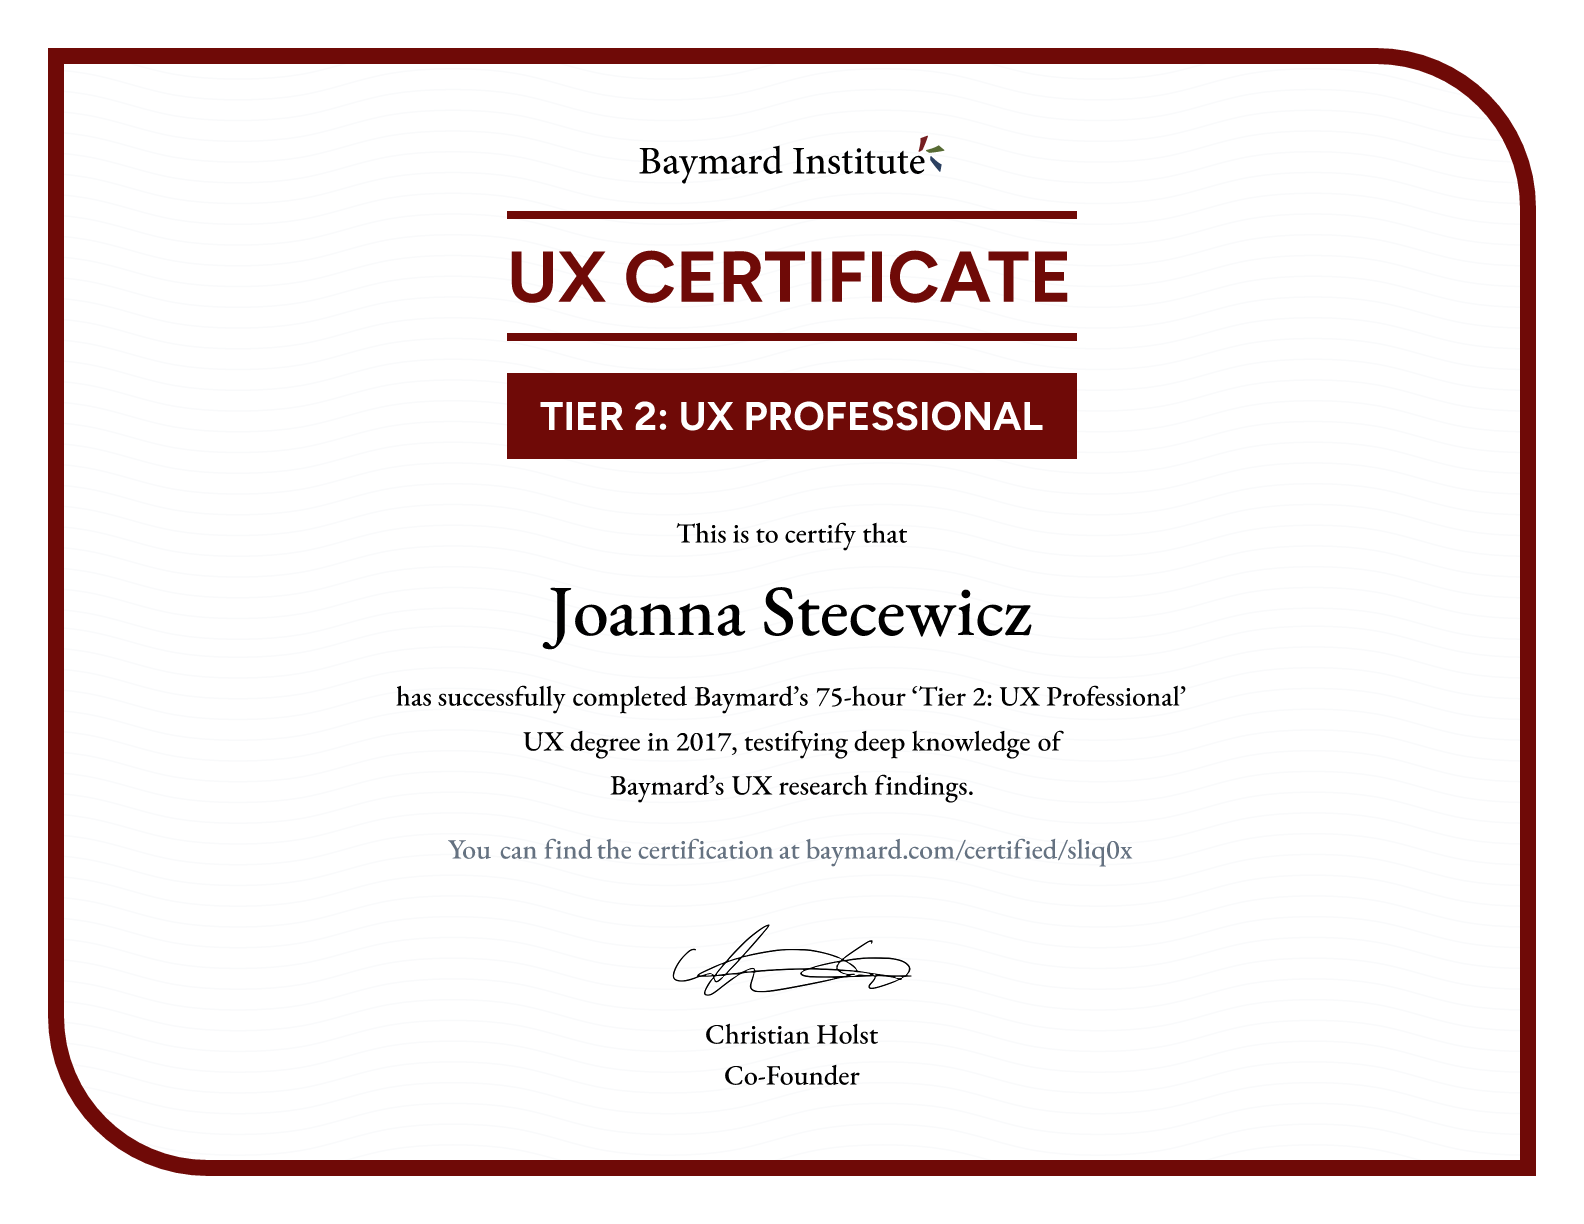 Joanna Stecewicz’s certificate